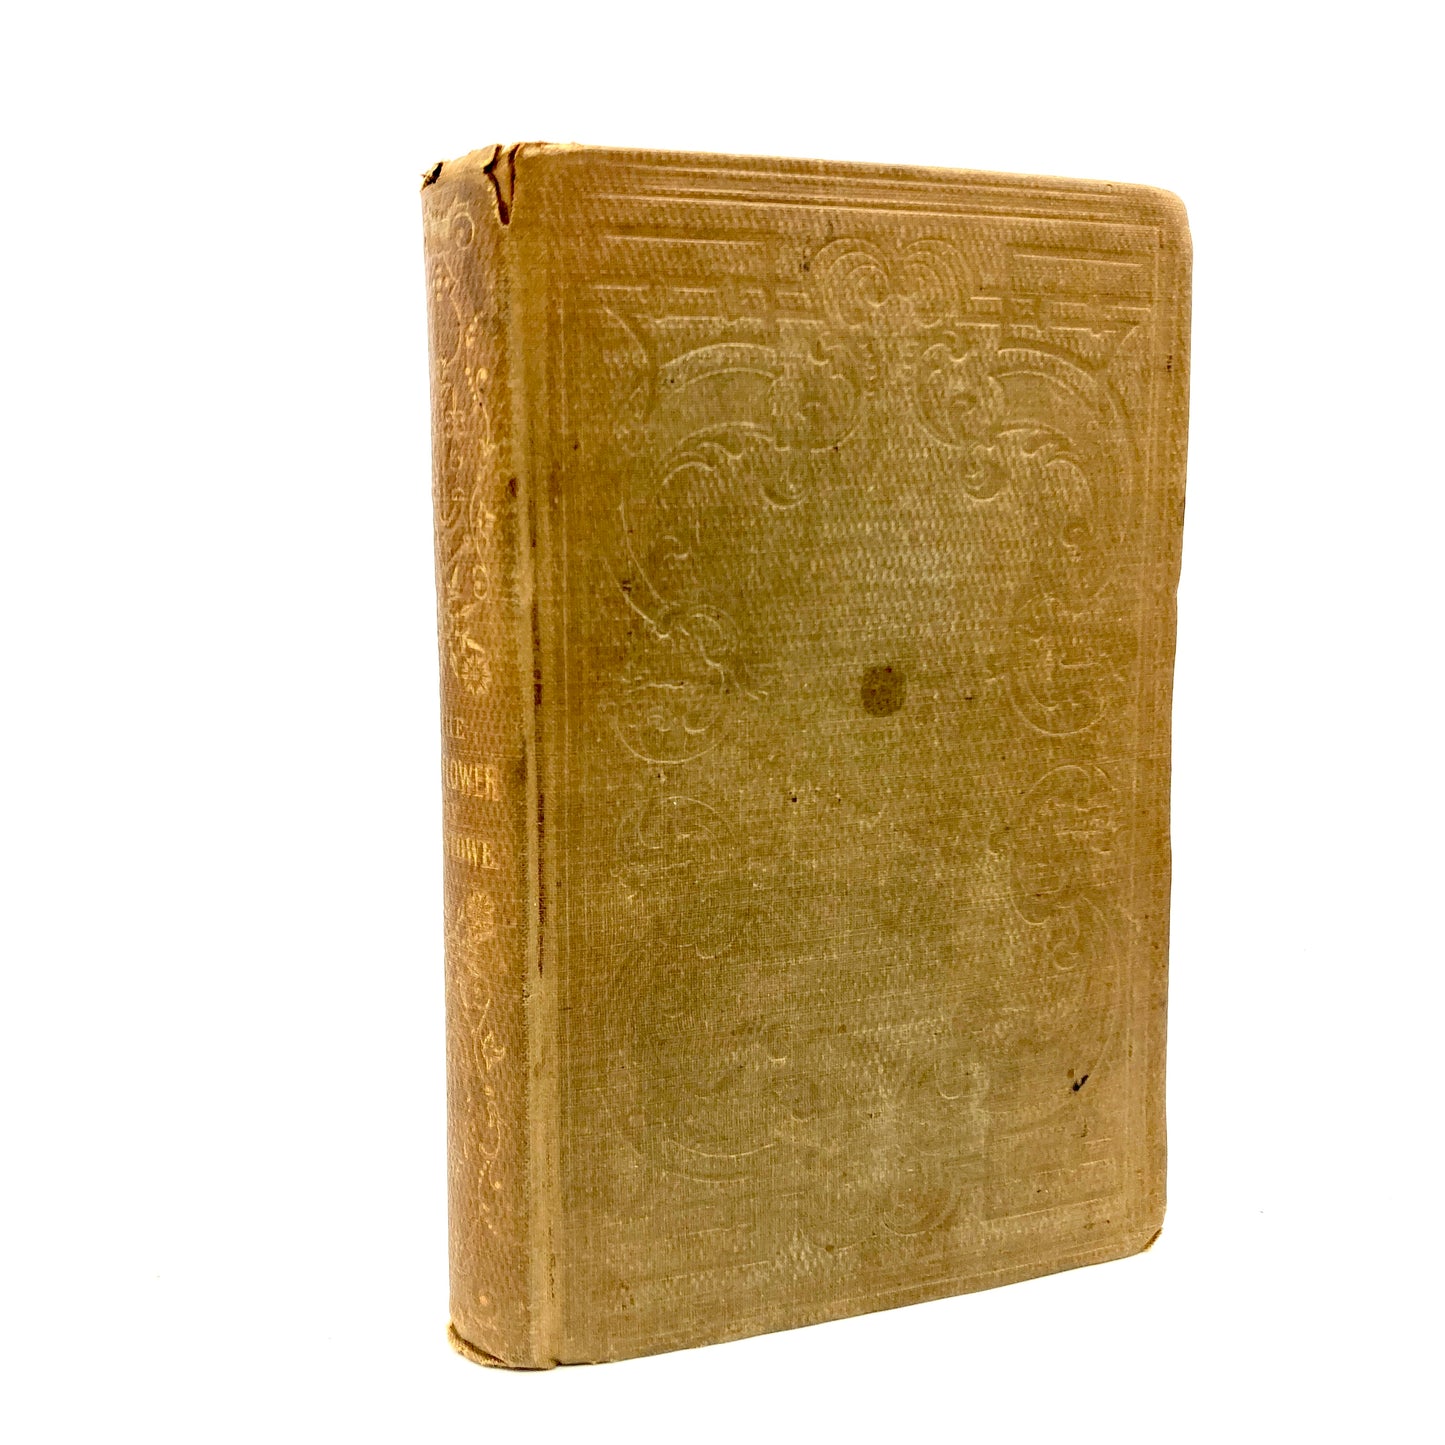 STOWE, Harriet Beecher "The Mayflower" [Harper & Brothers, 1843] 1st Edition - Buzz Bookstore